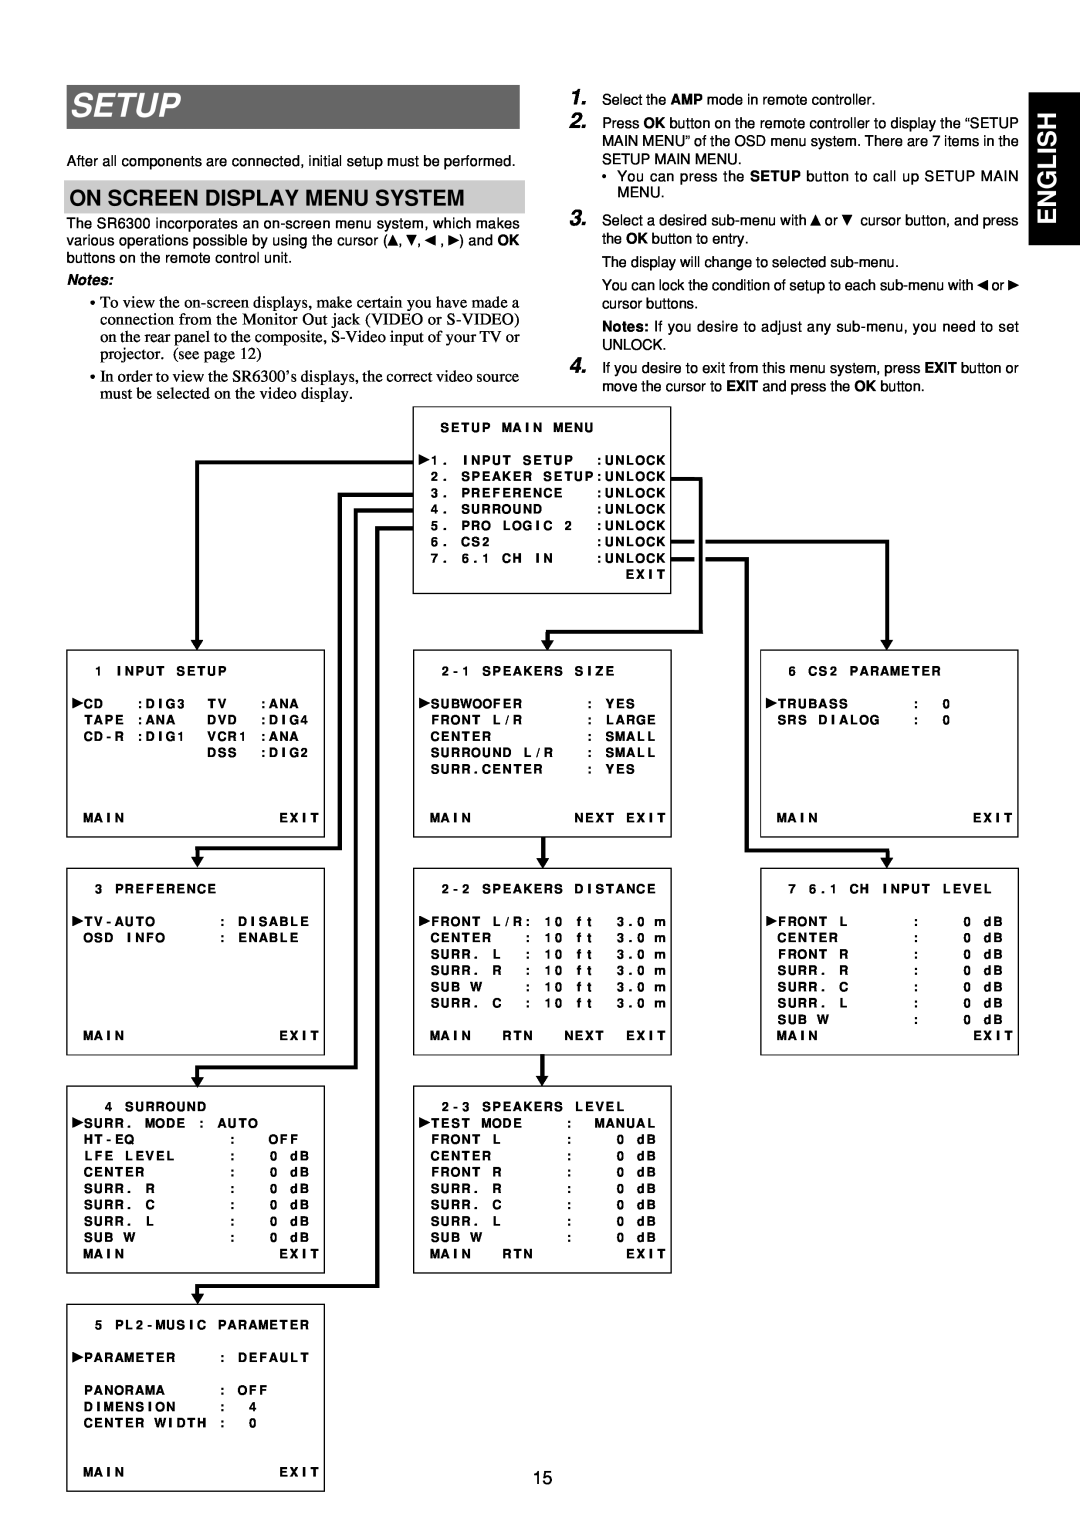 Marantz SR6300 manual Setup, English, On Screen Display Menu System 